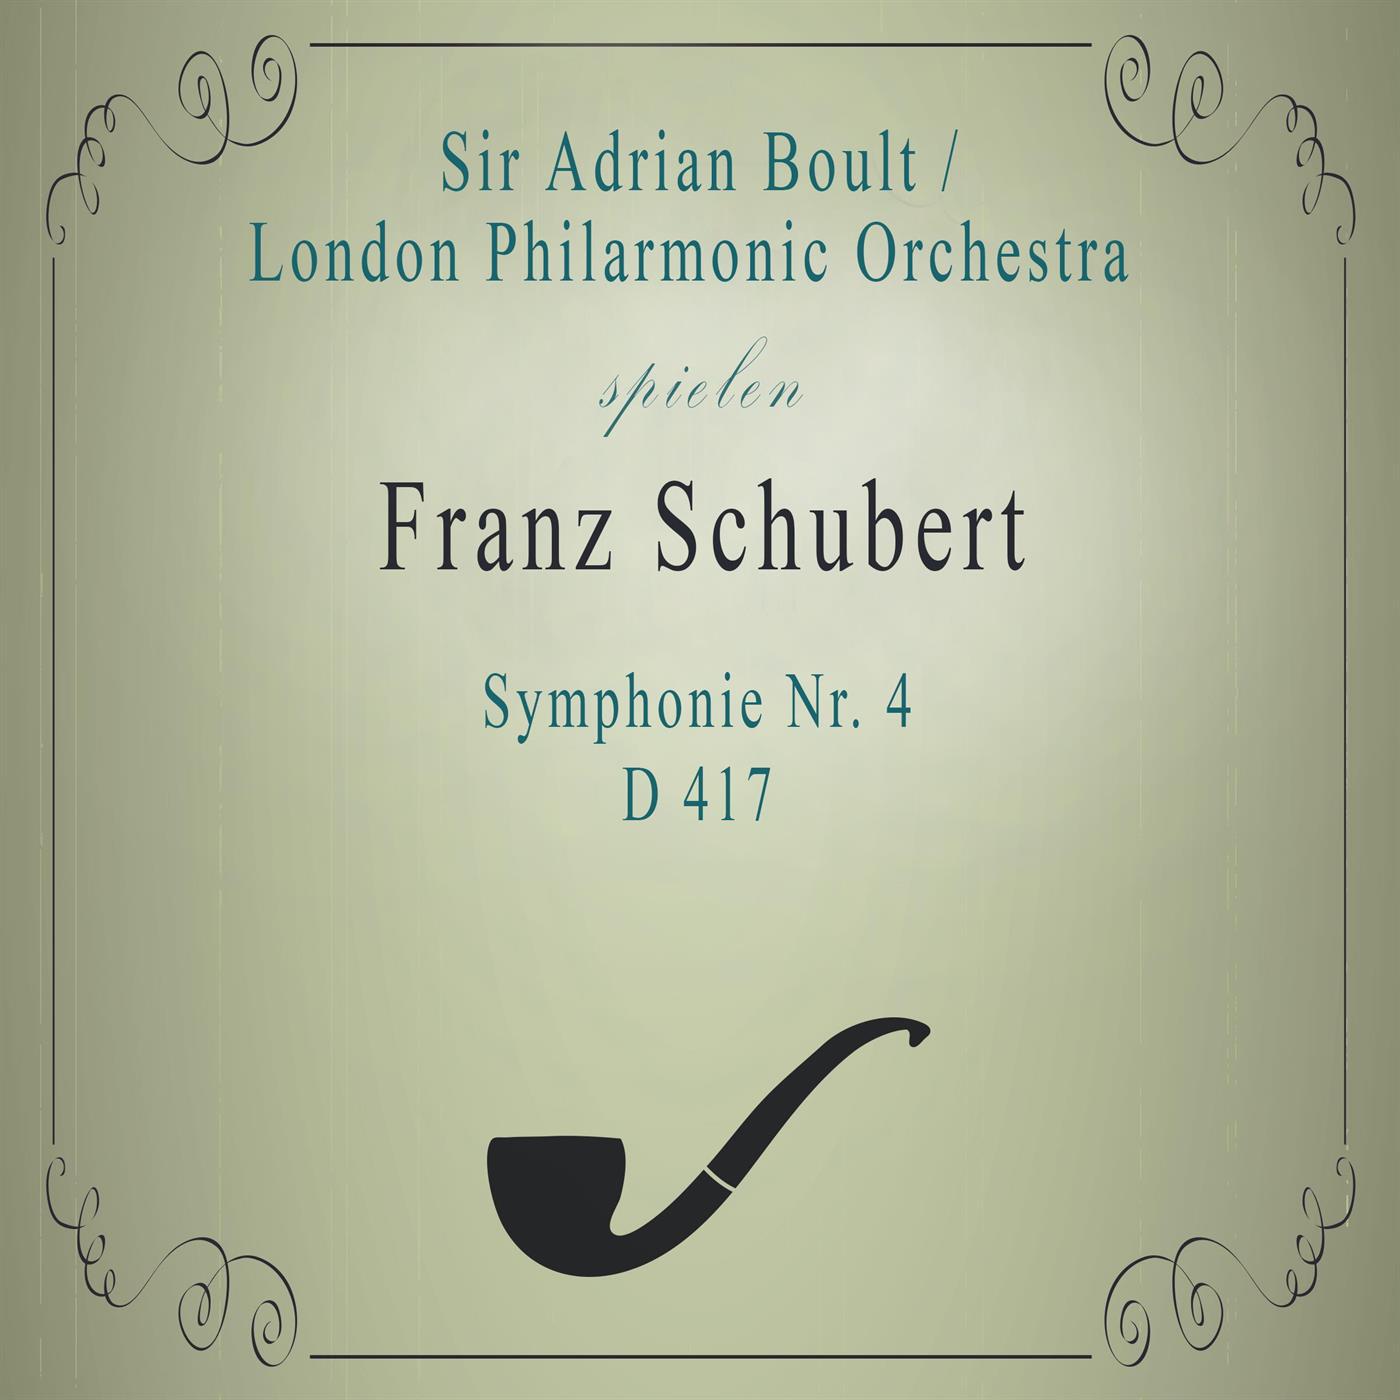 London Philarmonic Orchestra / Sir Adrian Boult spielen: Franz Schubert: Symphonie Nr. 4, D 417专辑